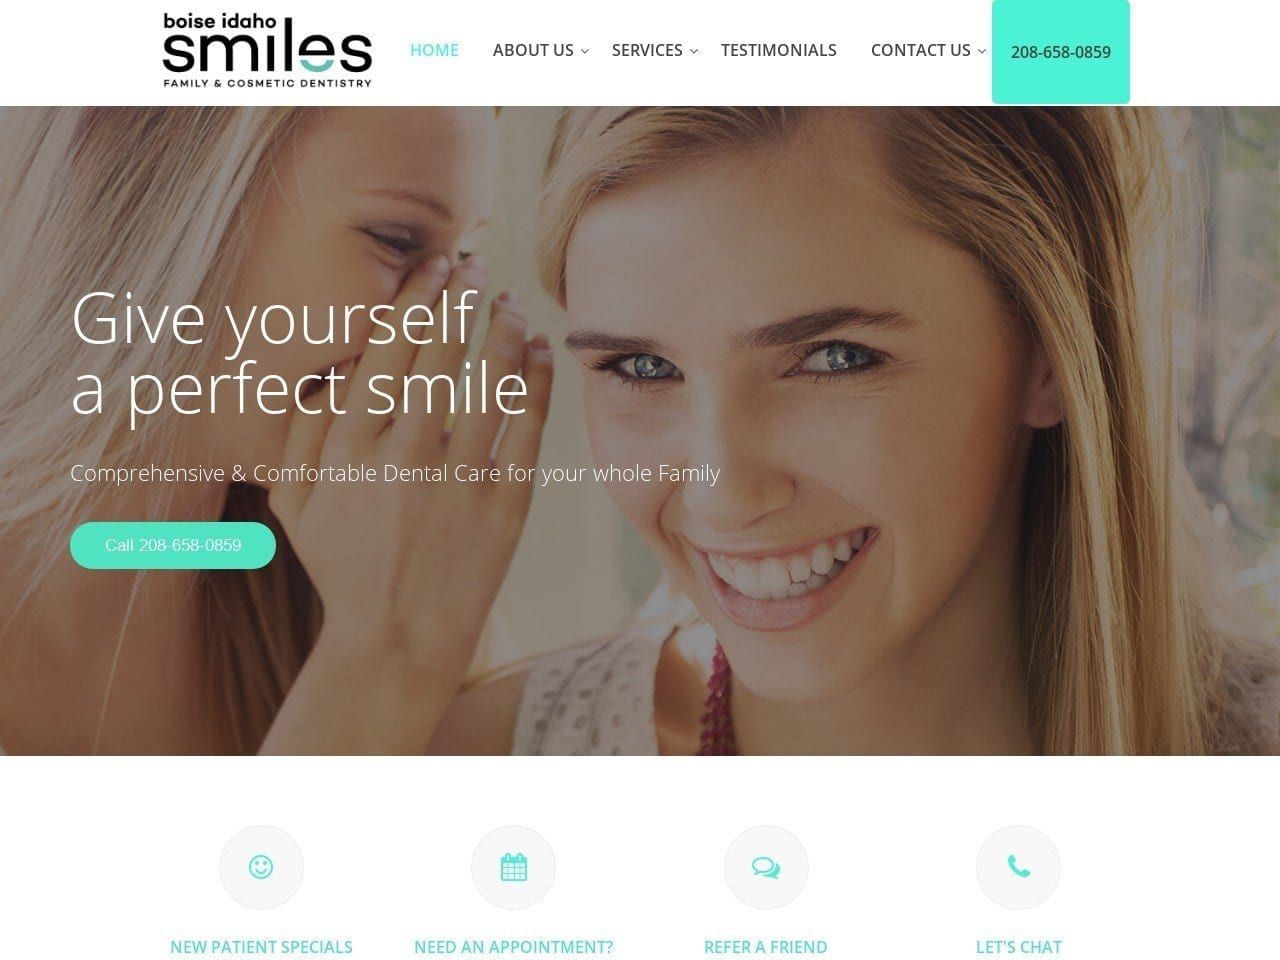 Taylor Family Dentistry Website Screenshot from boiseidahosmiles.com